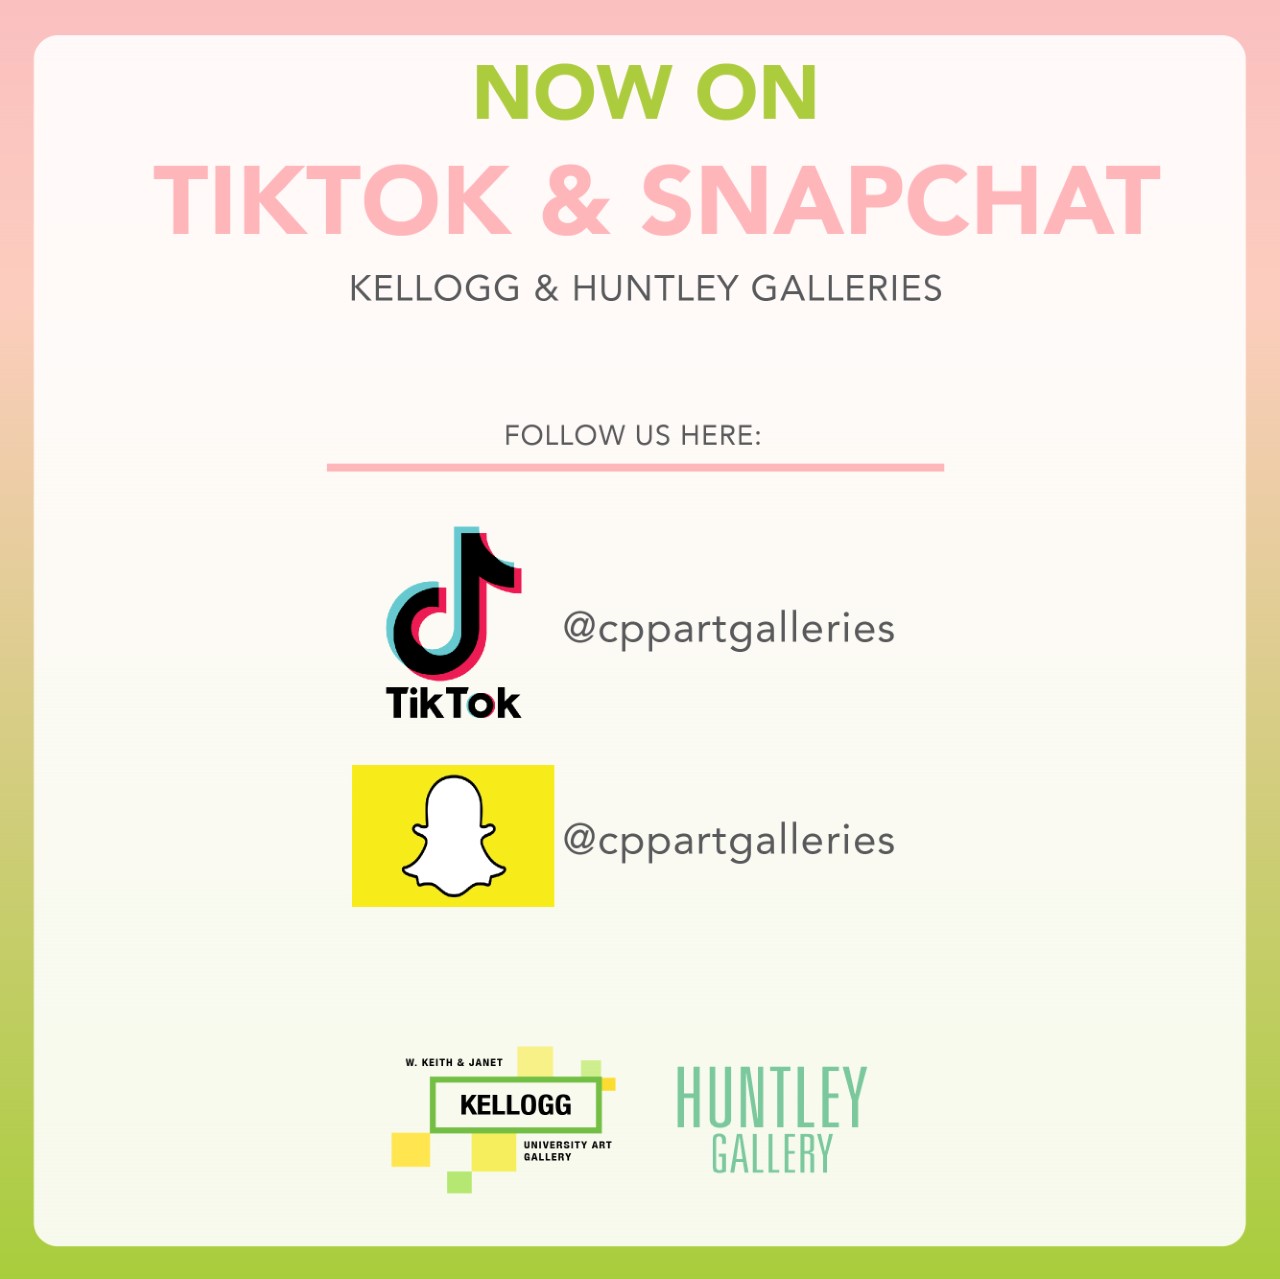 Now on Tiktok and Snapchat